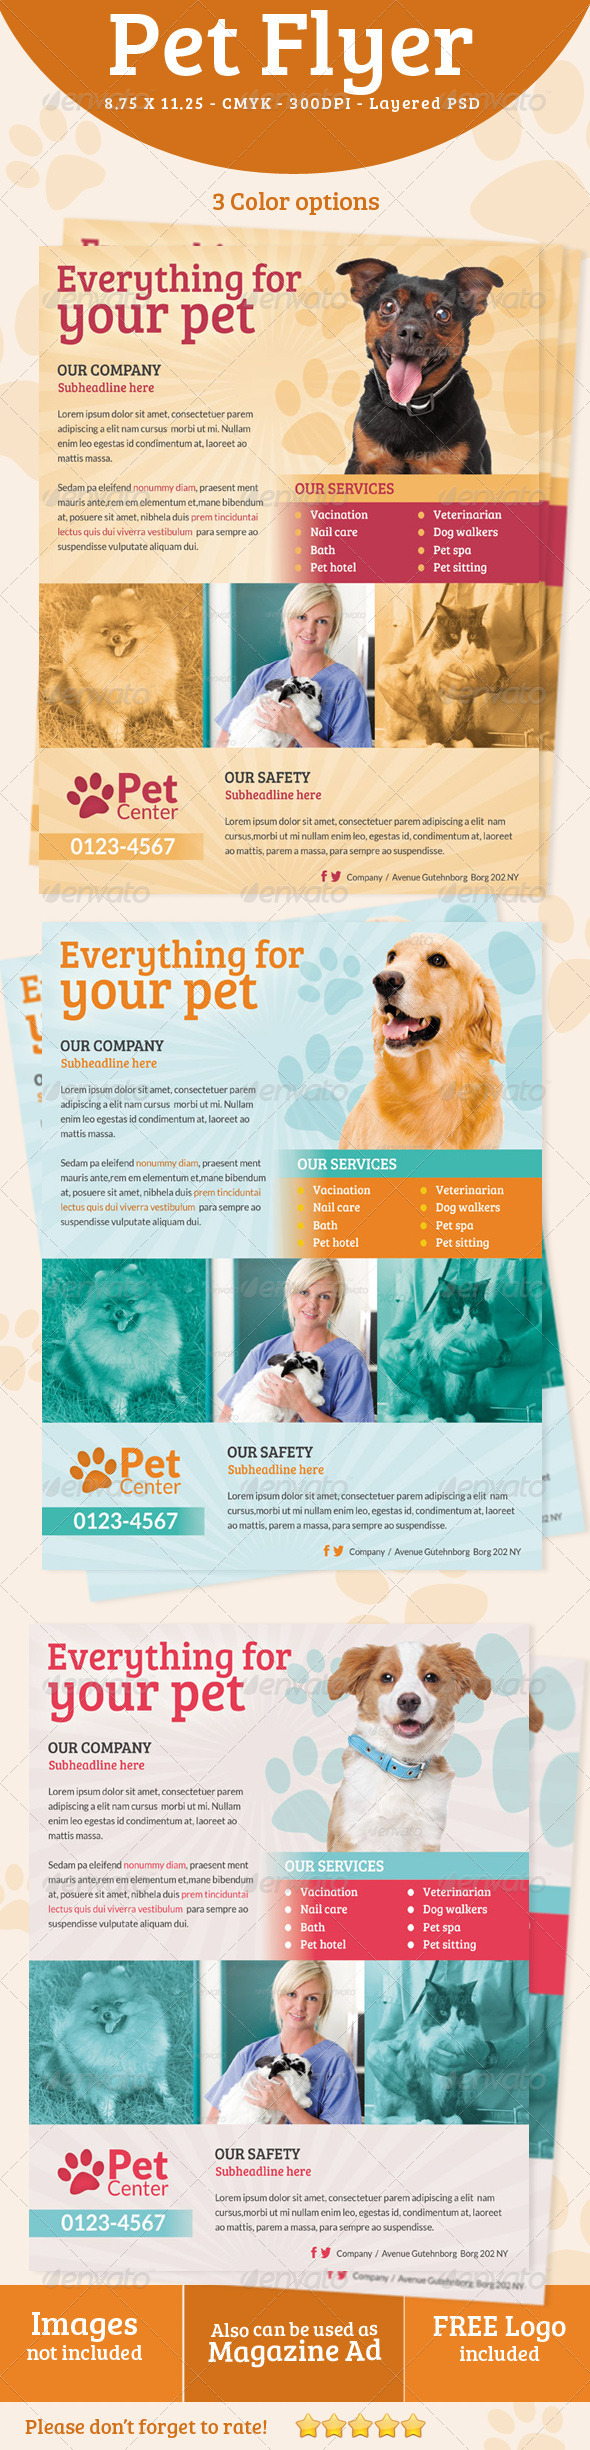 Pet Services Flyer/ Print ad